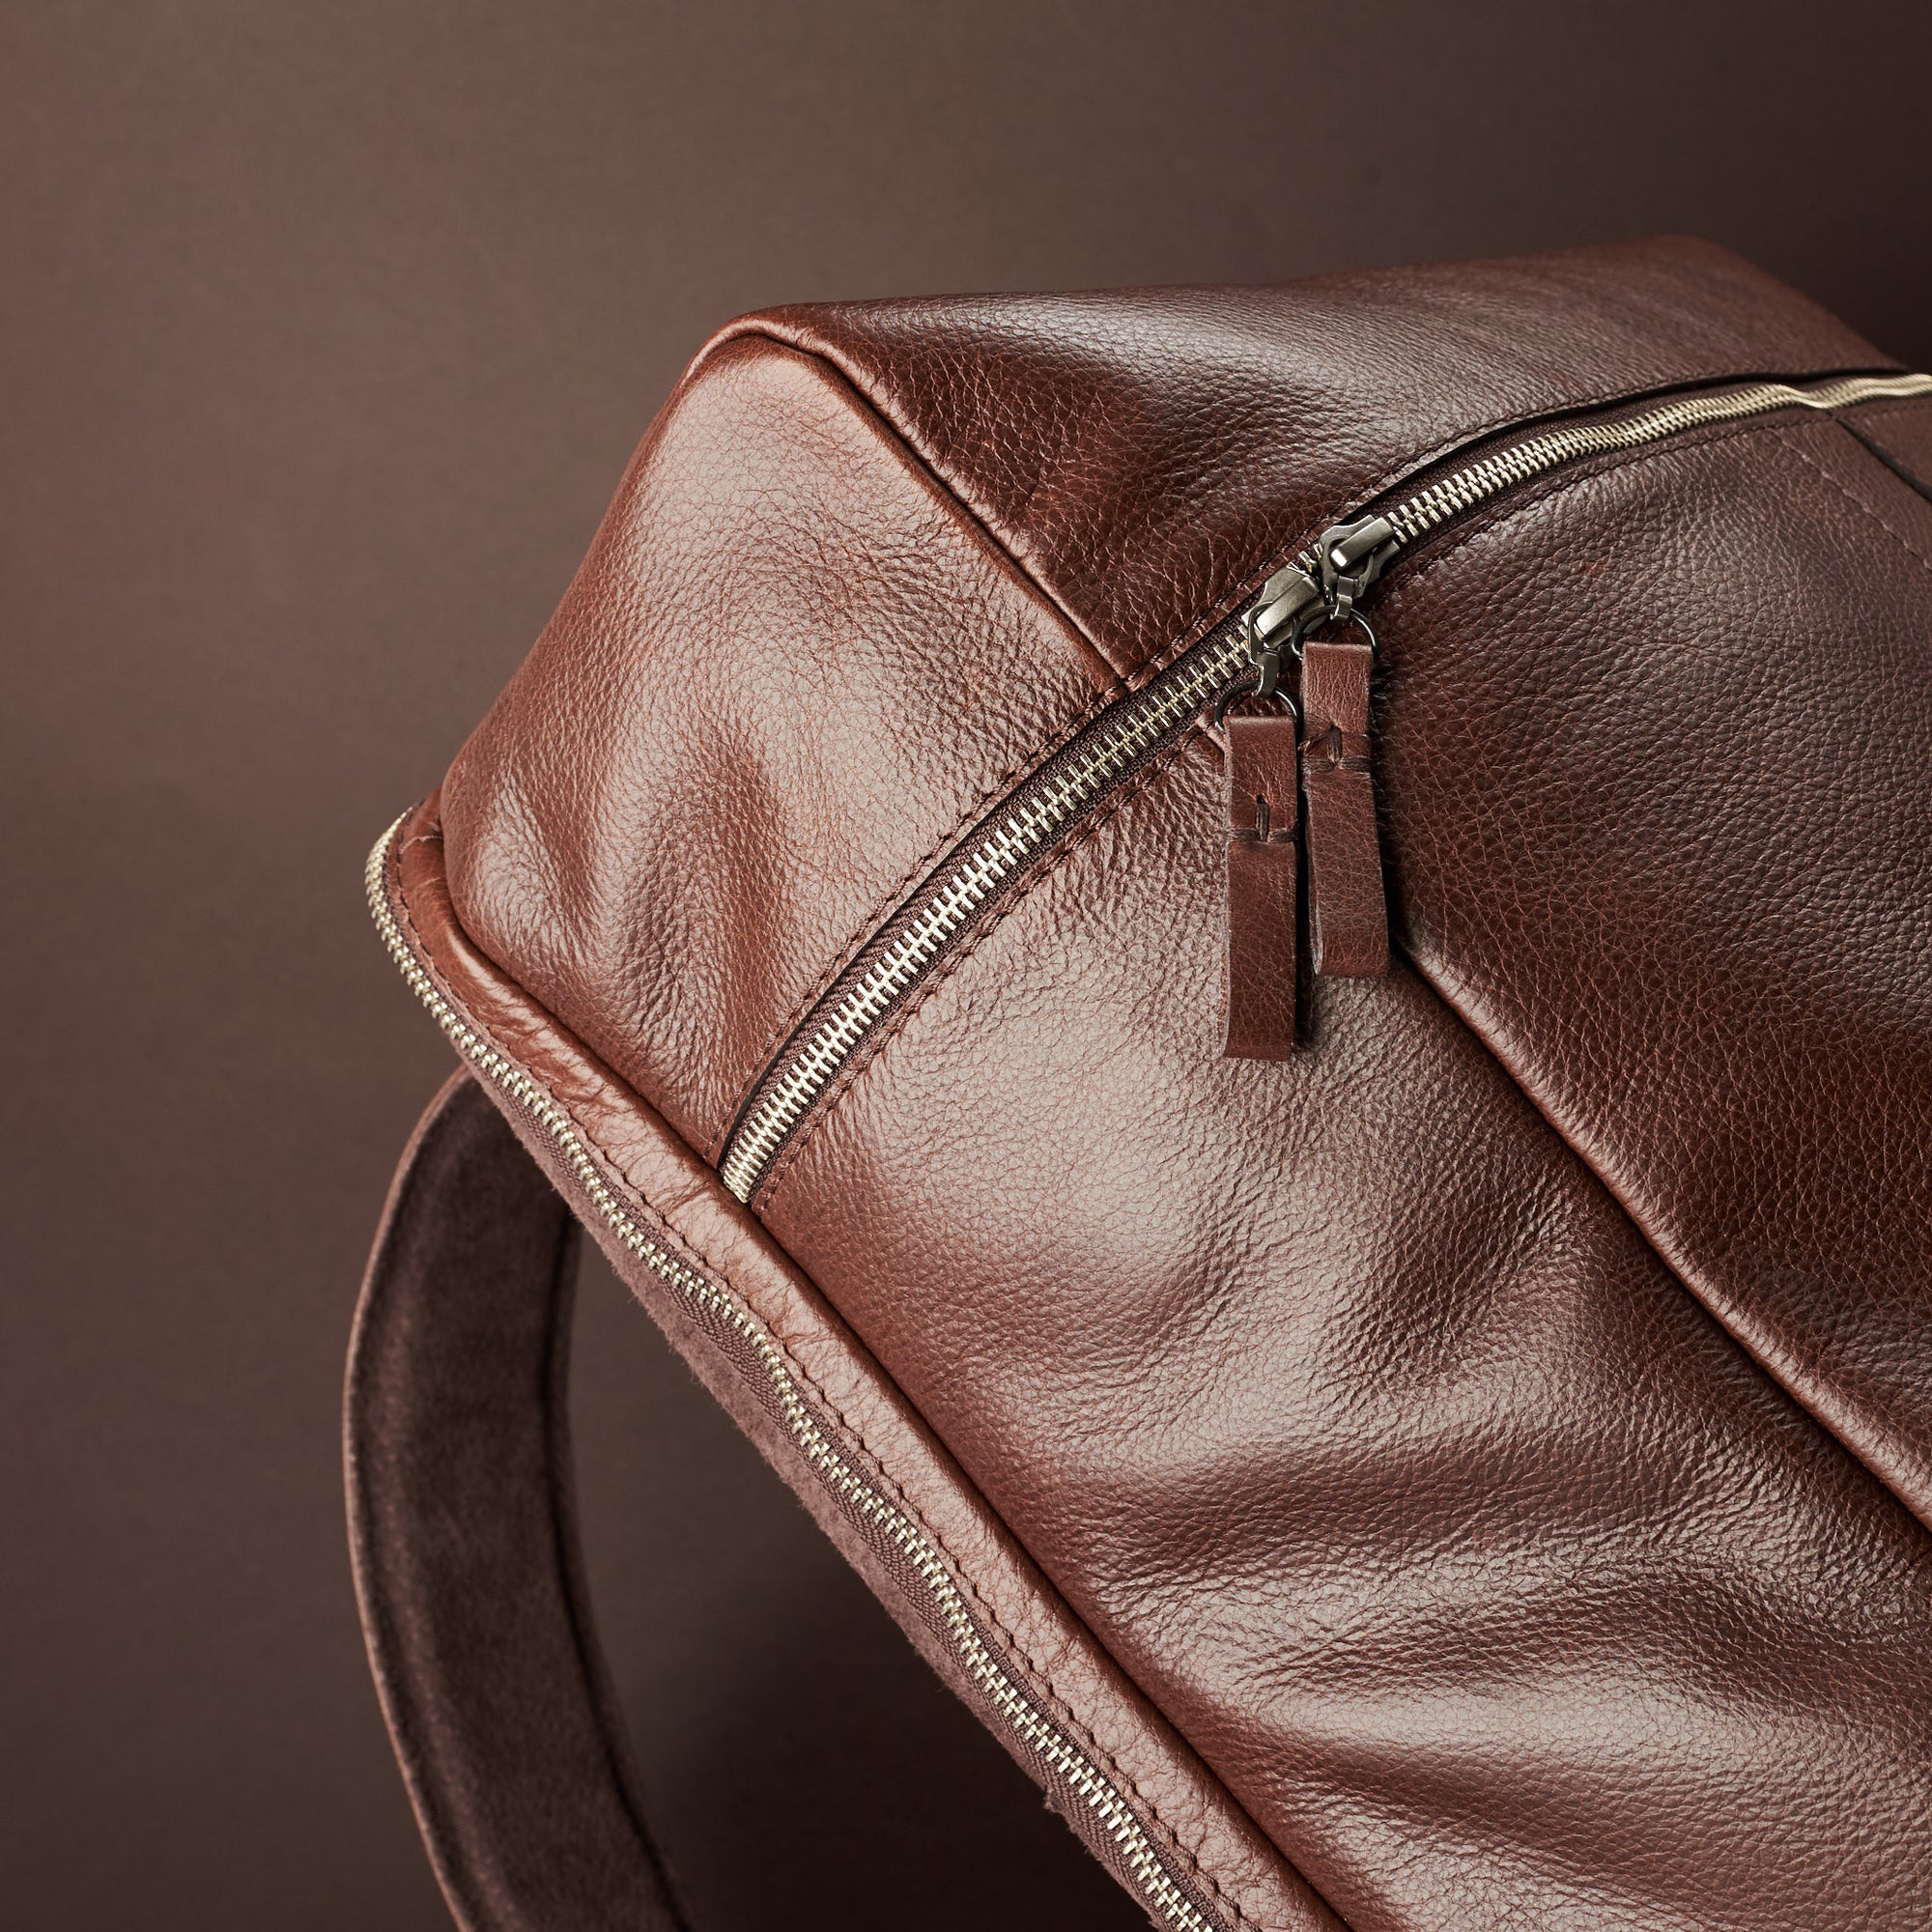 Banteng Backpack. Lifetime Warranty by Capra Leather